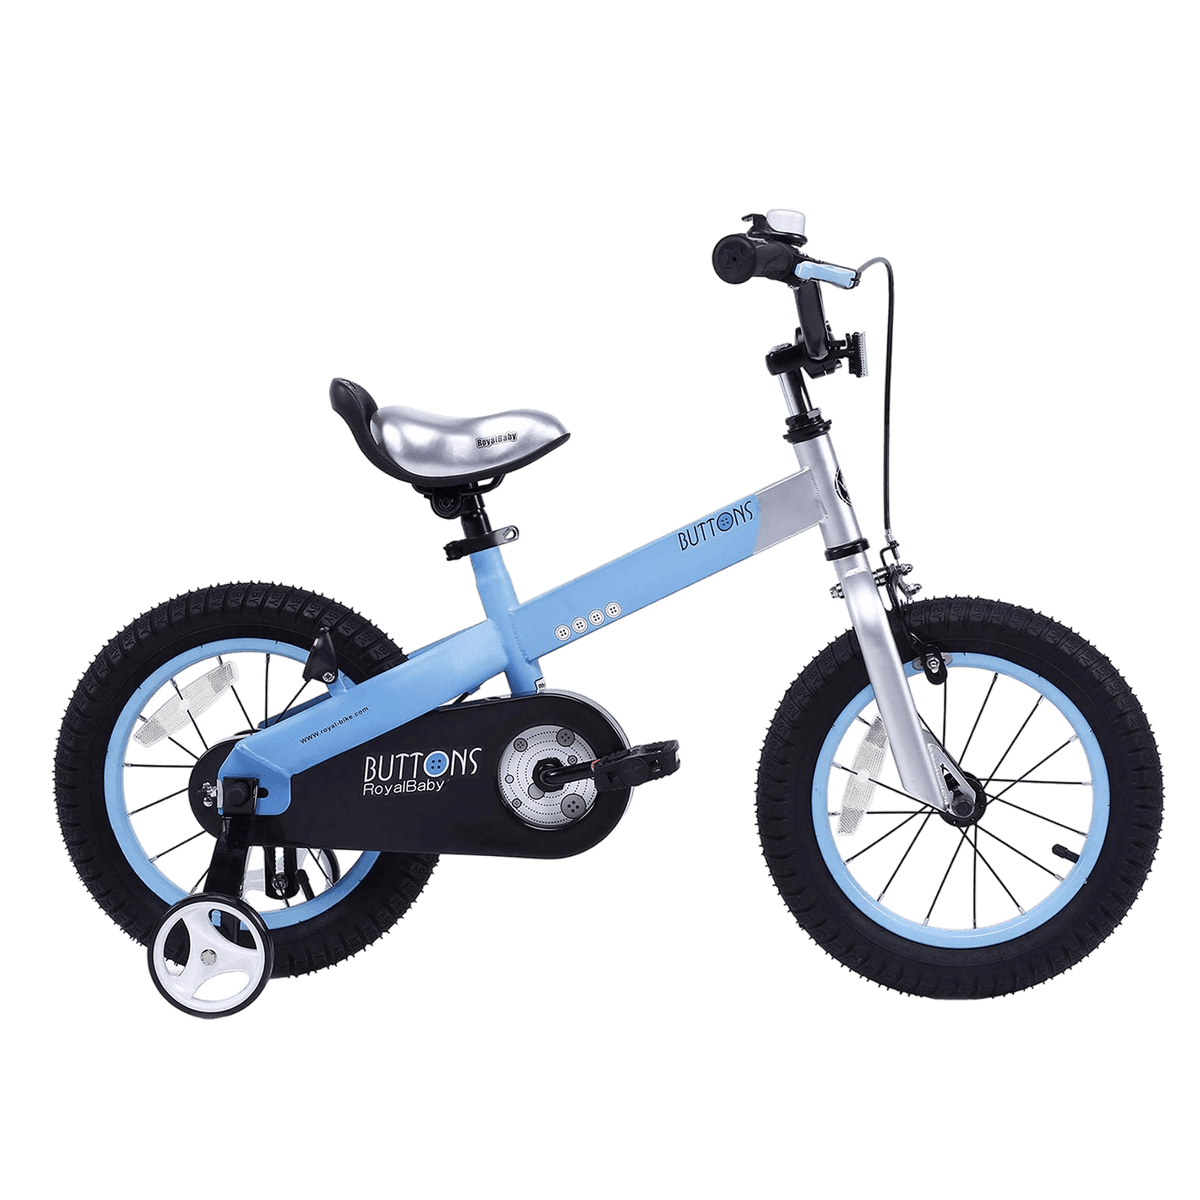 RoyalBaby Buttons Kids Bike